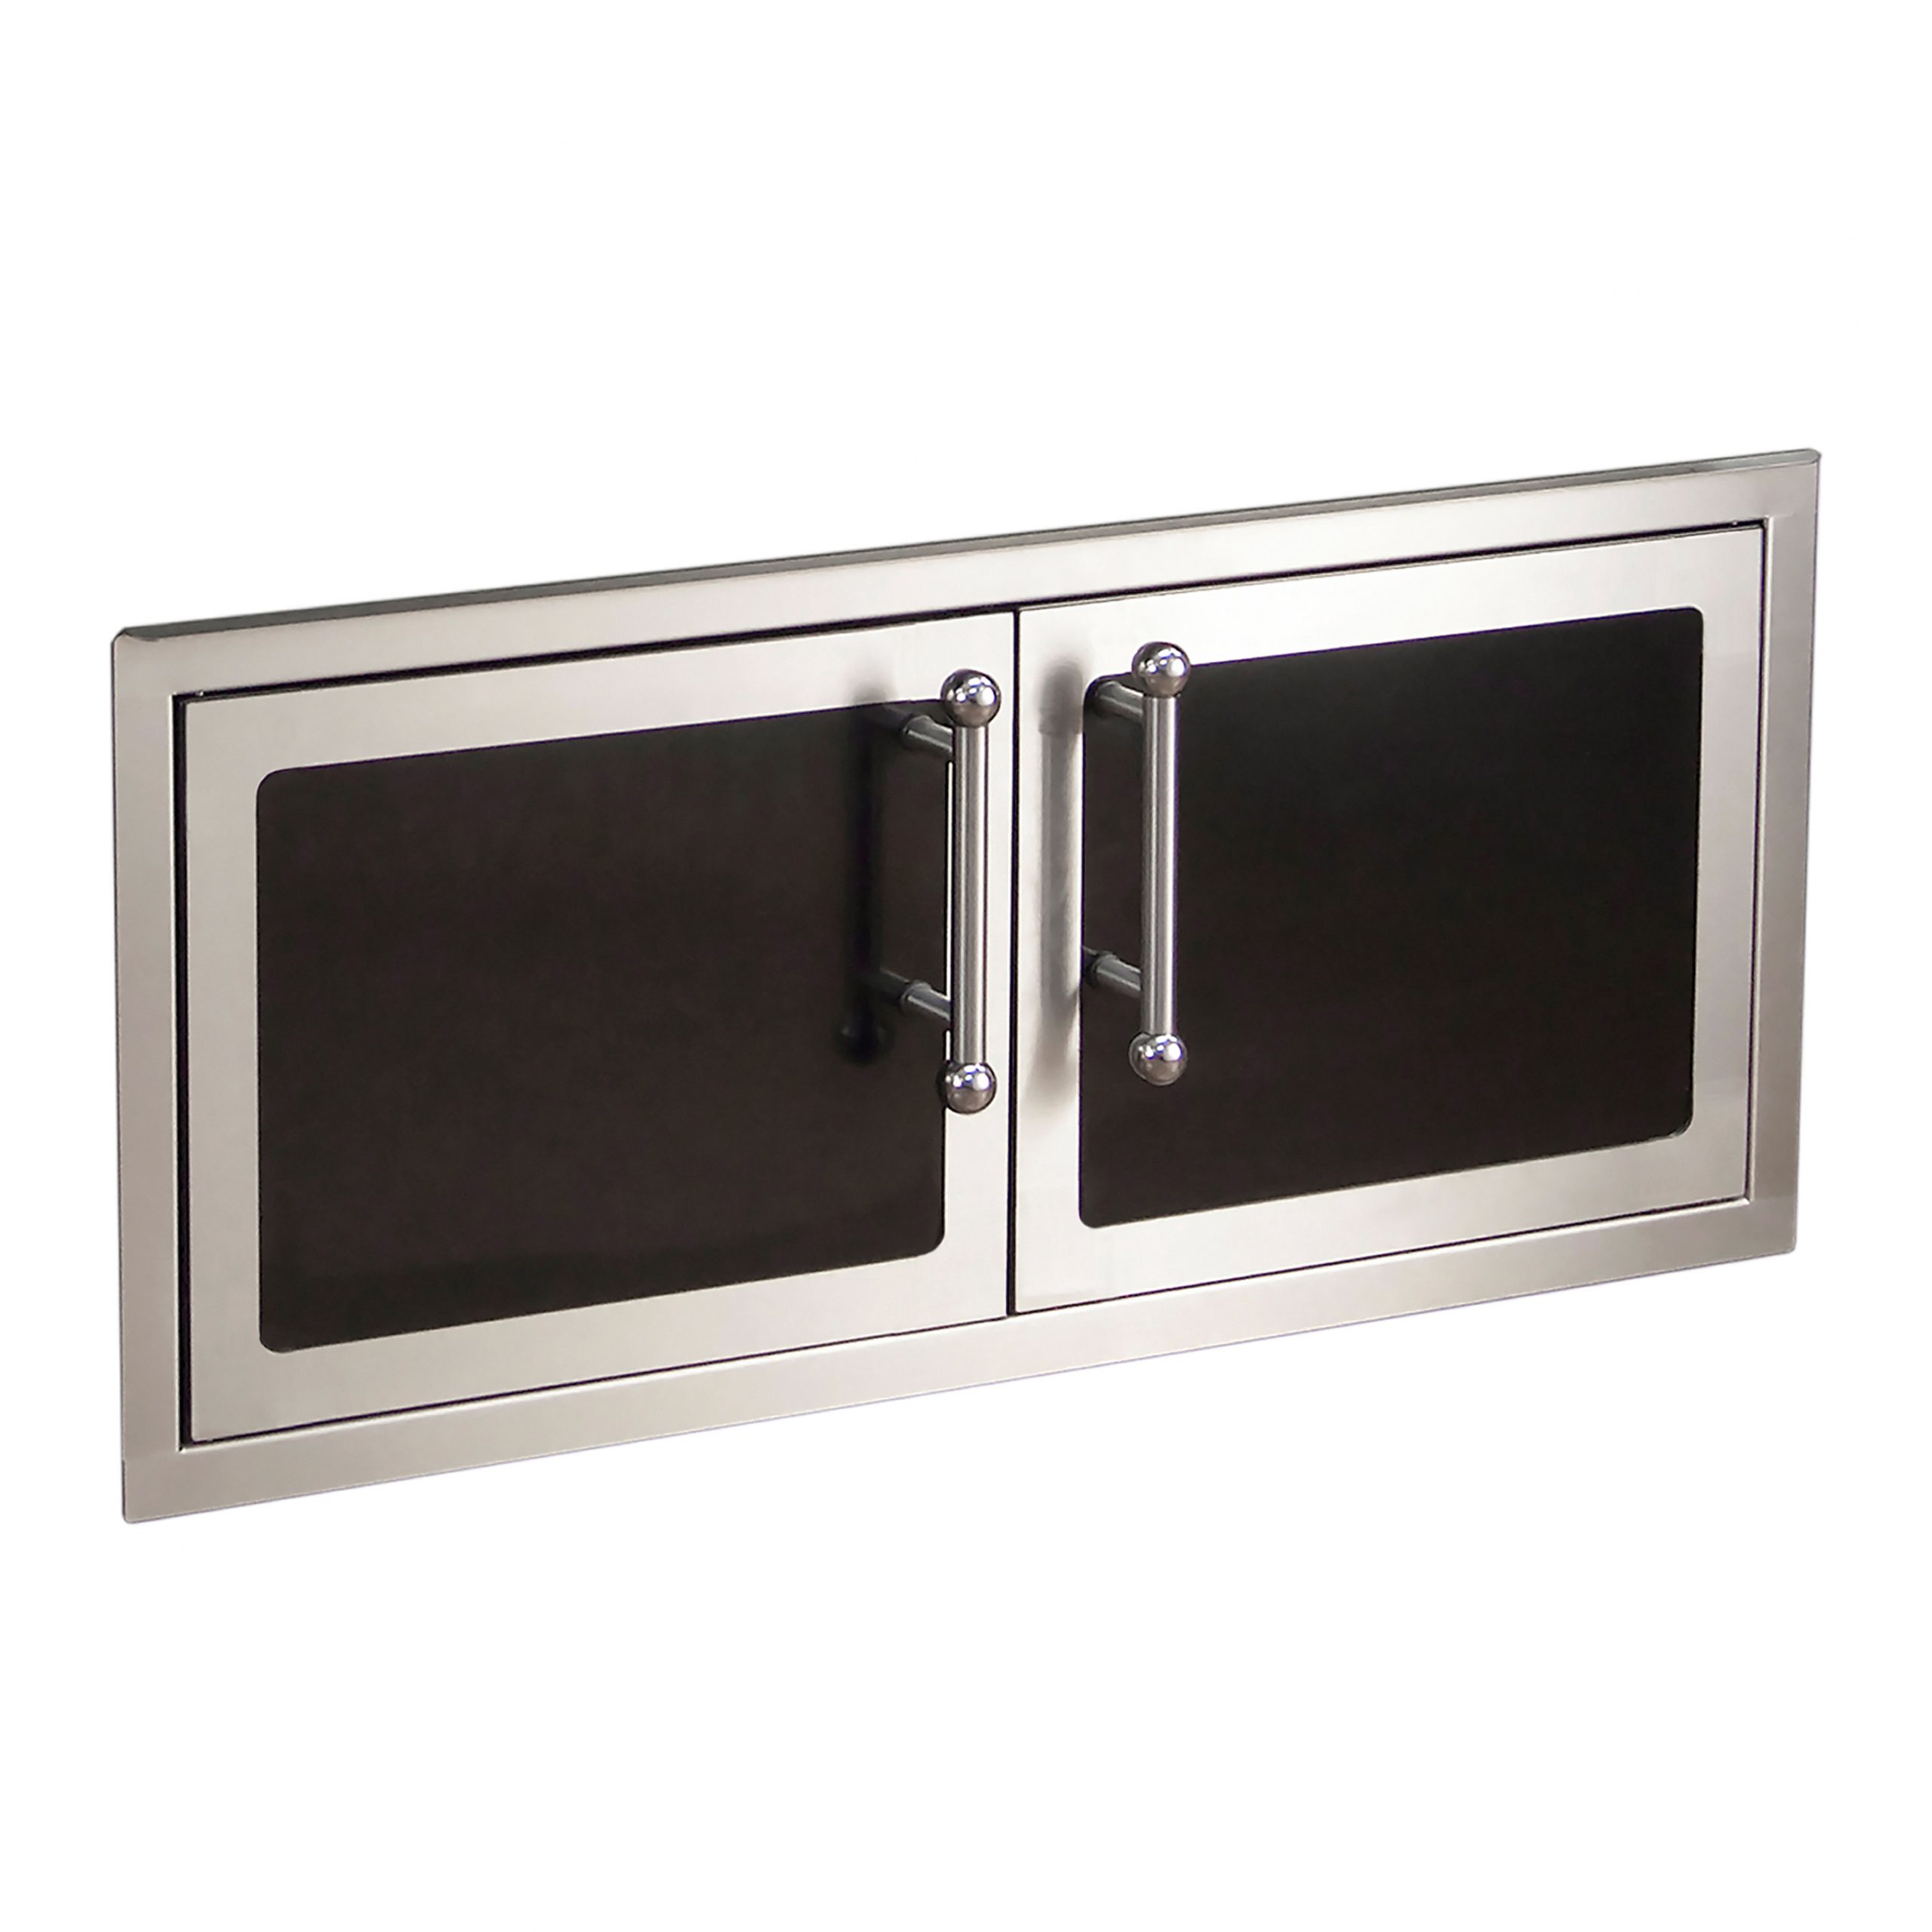 16 x 39 rh double doors – black diamond product image